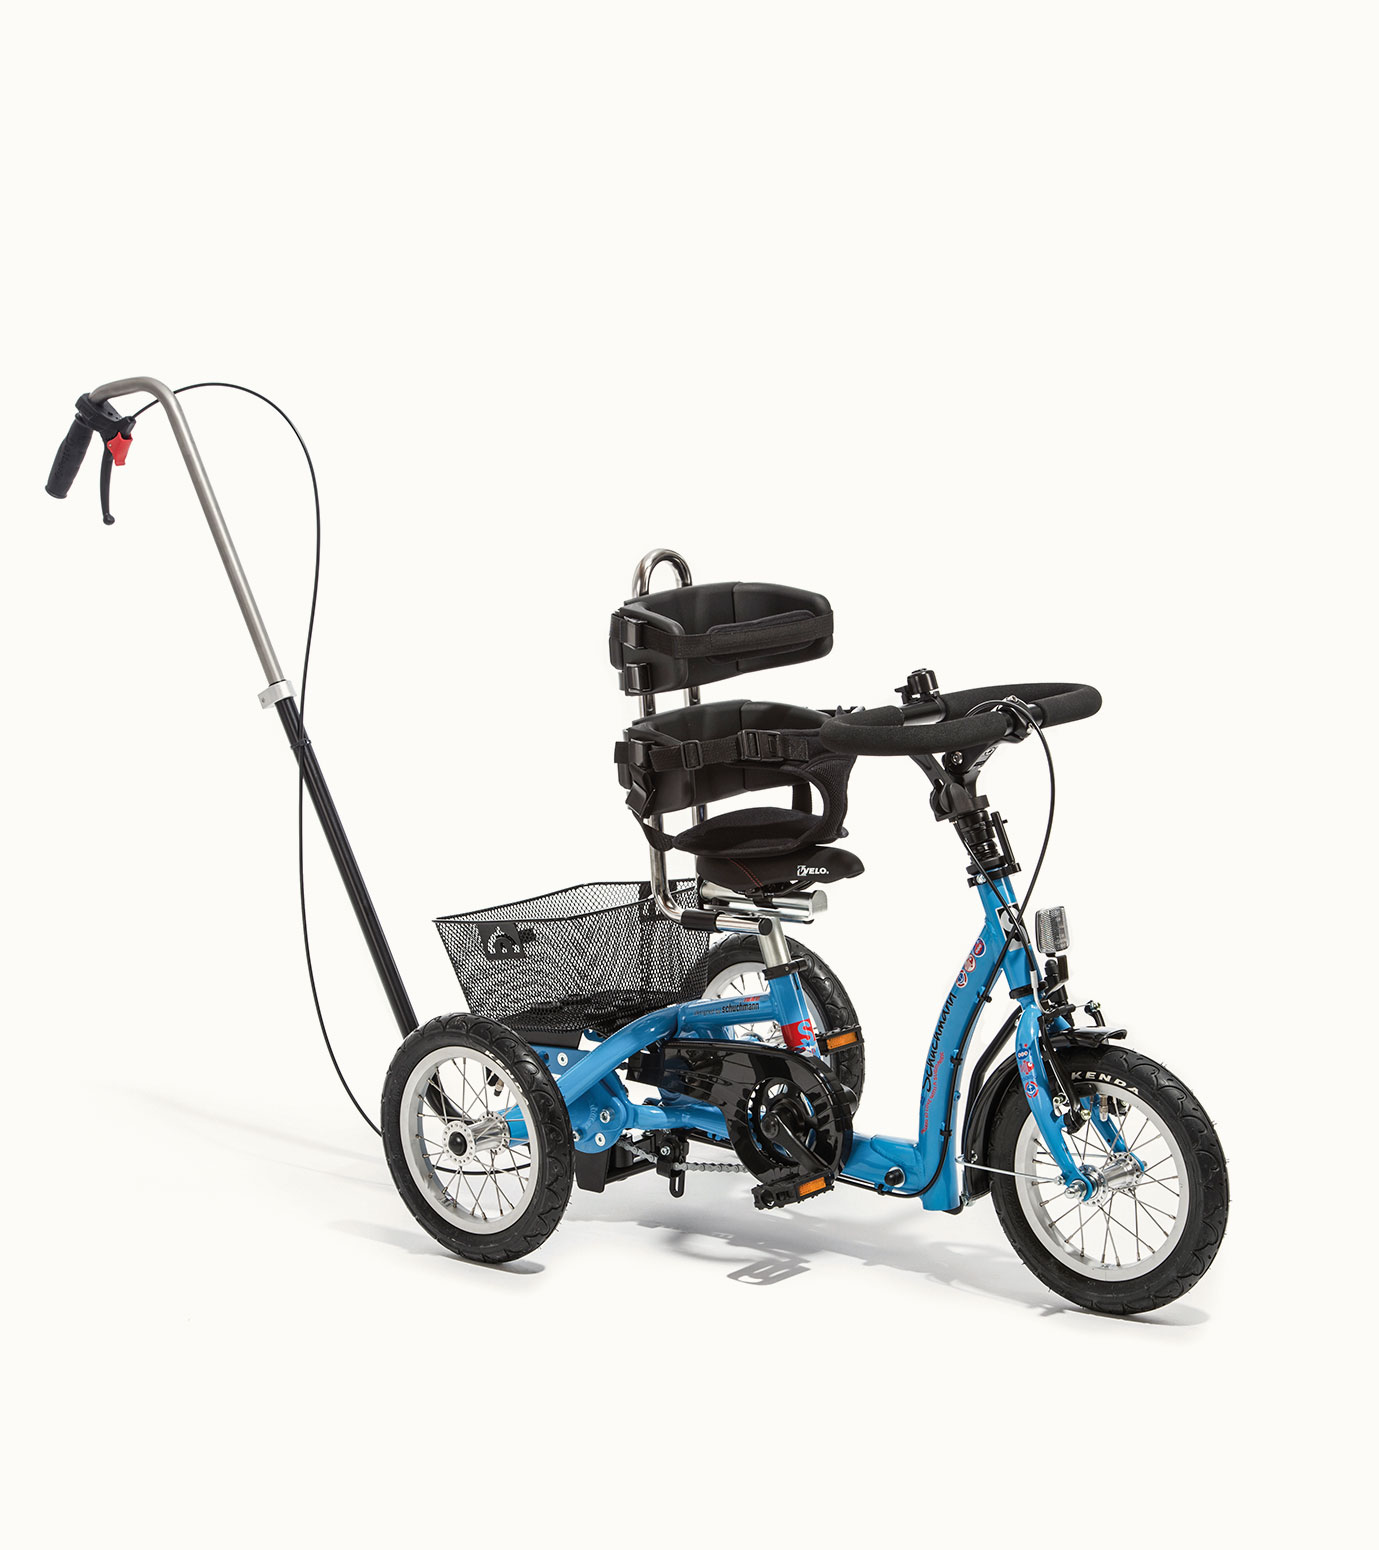 Schuchmann Momo Tricycle